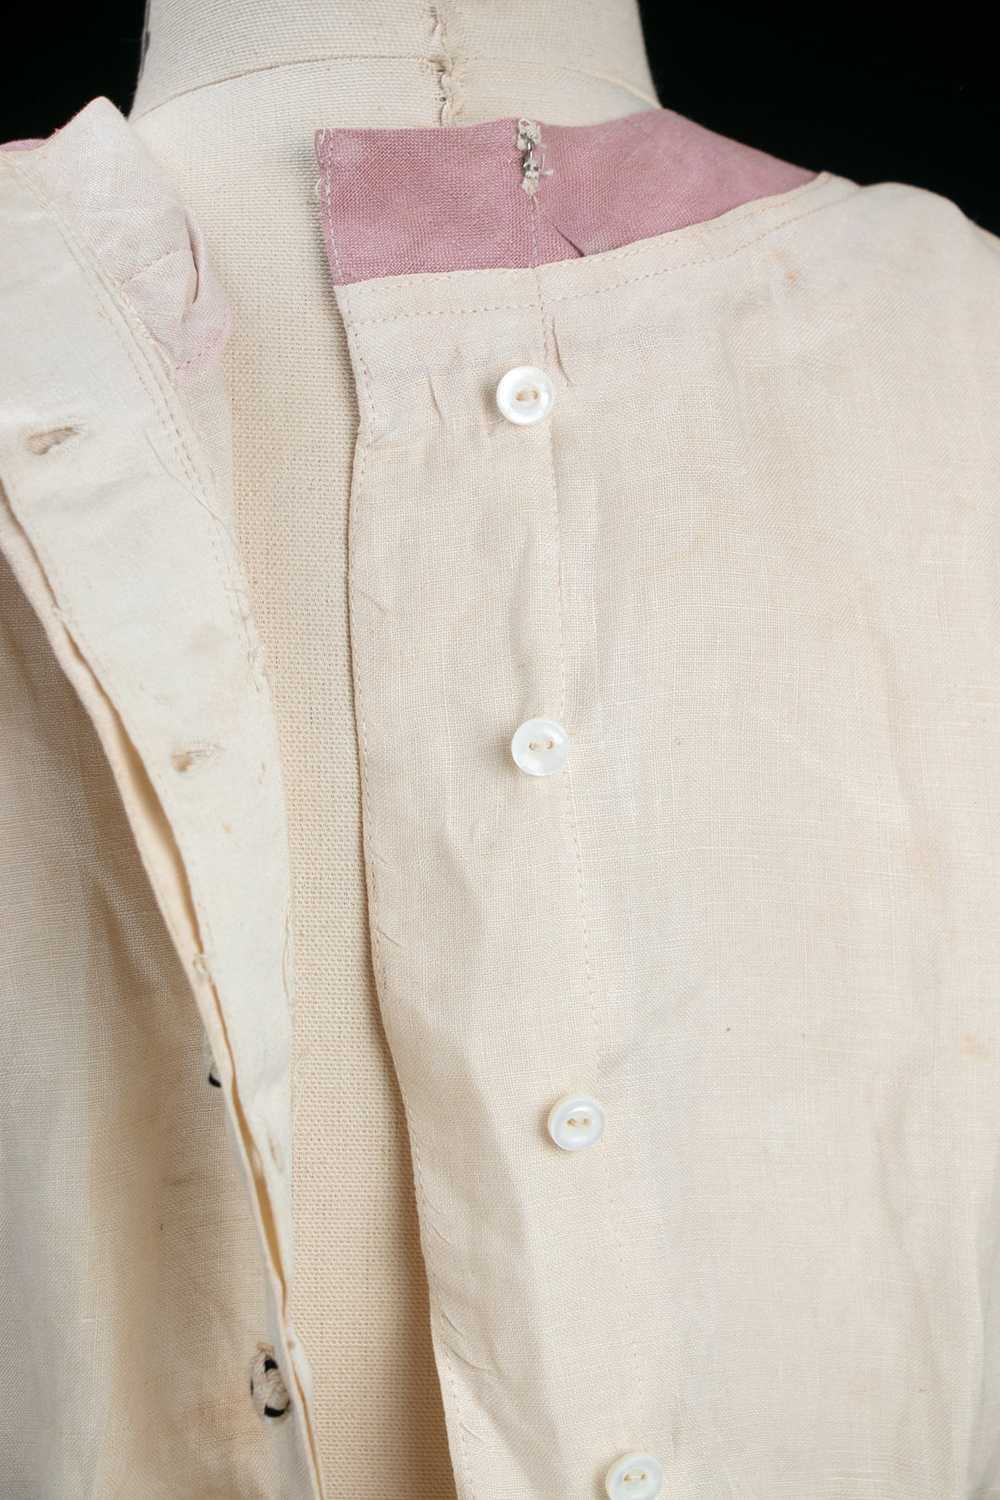 Antique Edwardian Era Cream Colored Linen Dress - image 11